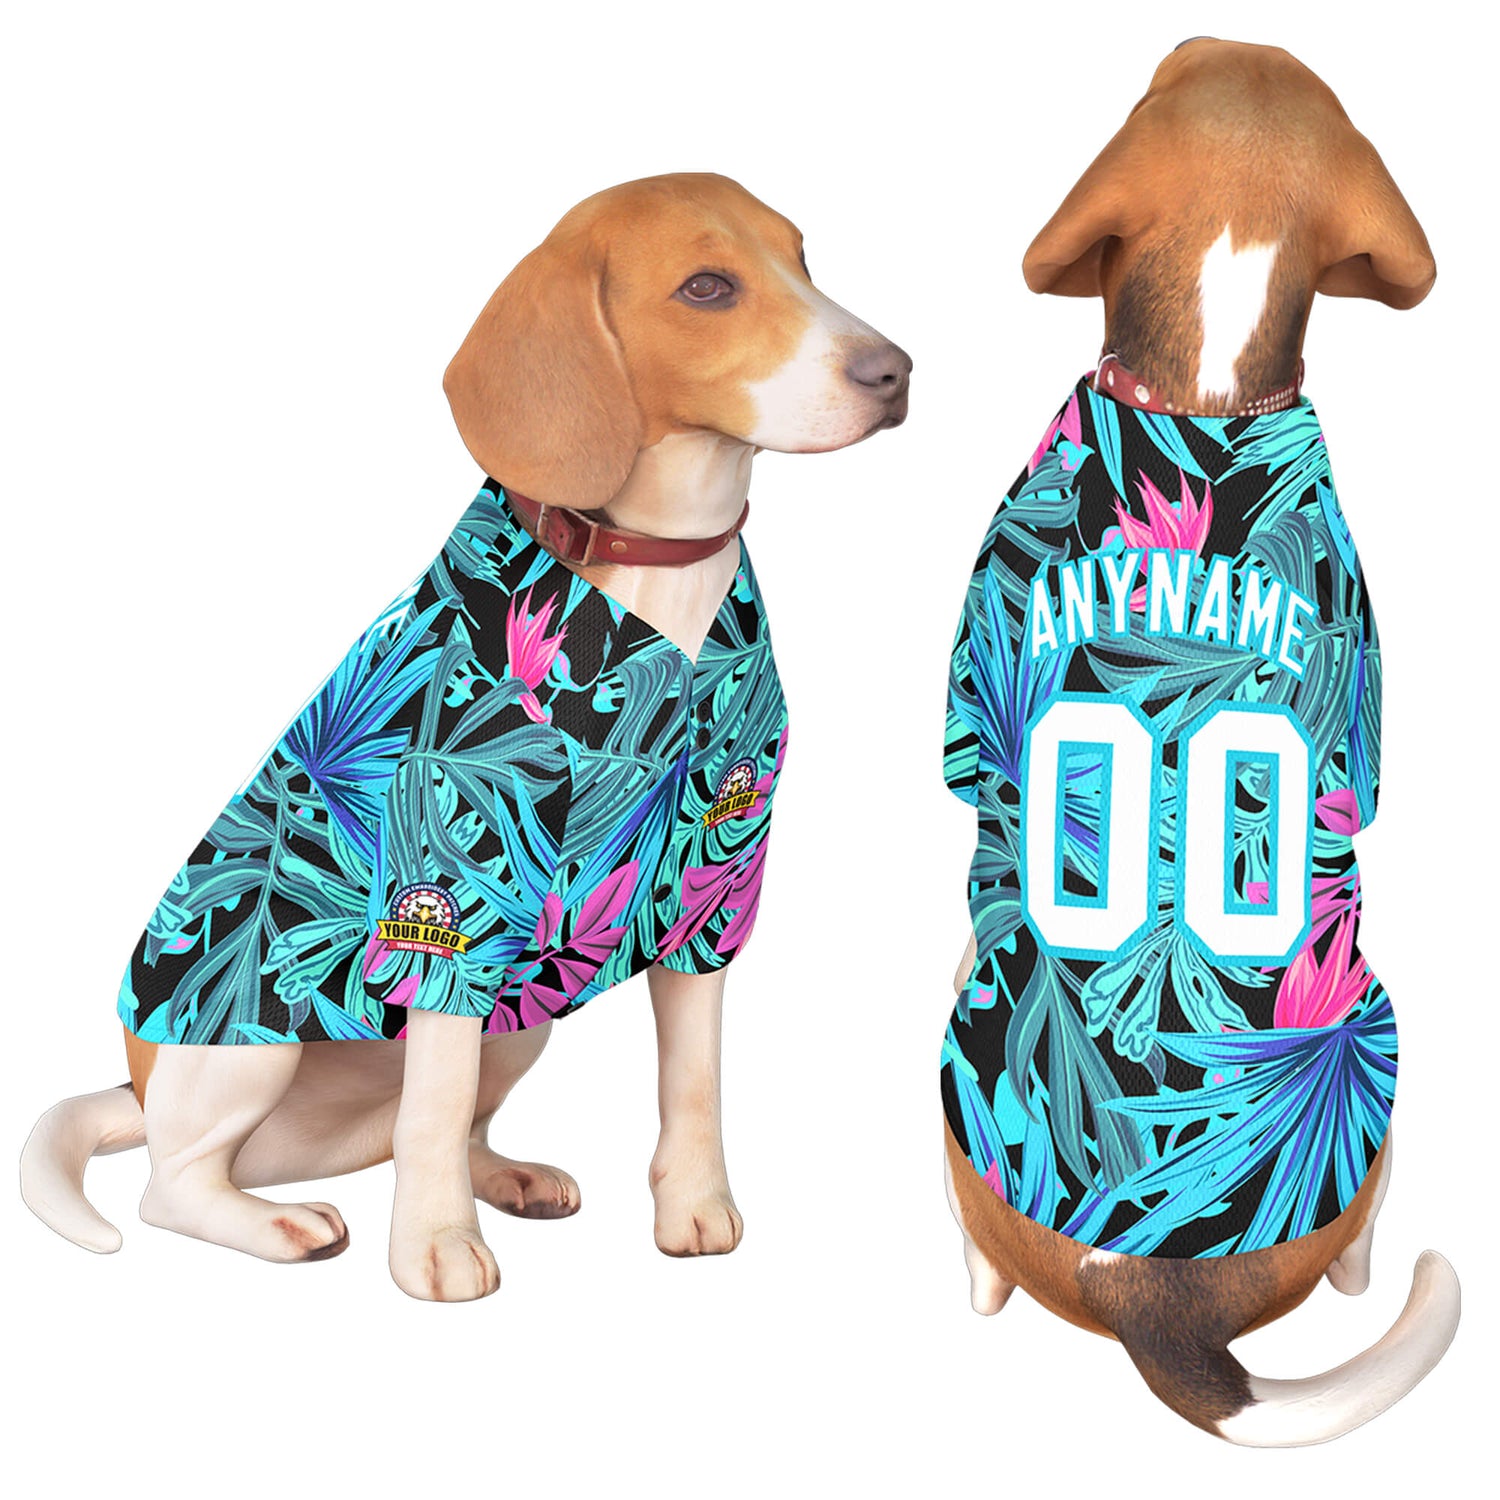 kxk custom graffiti pattern dog jersey